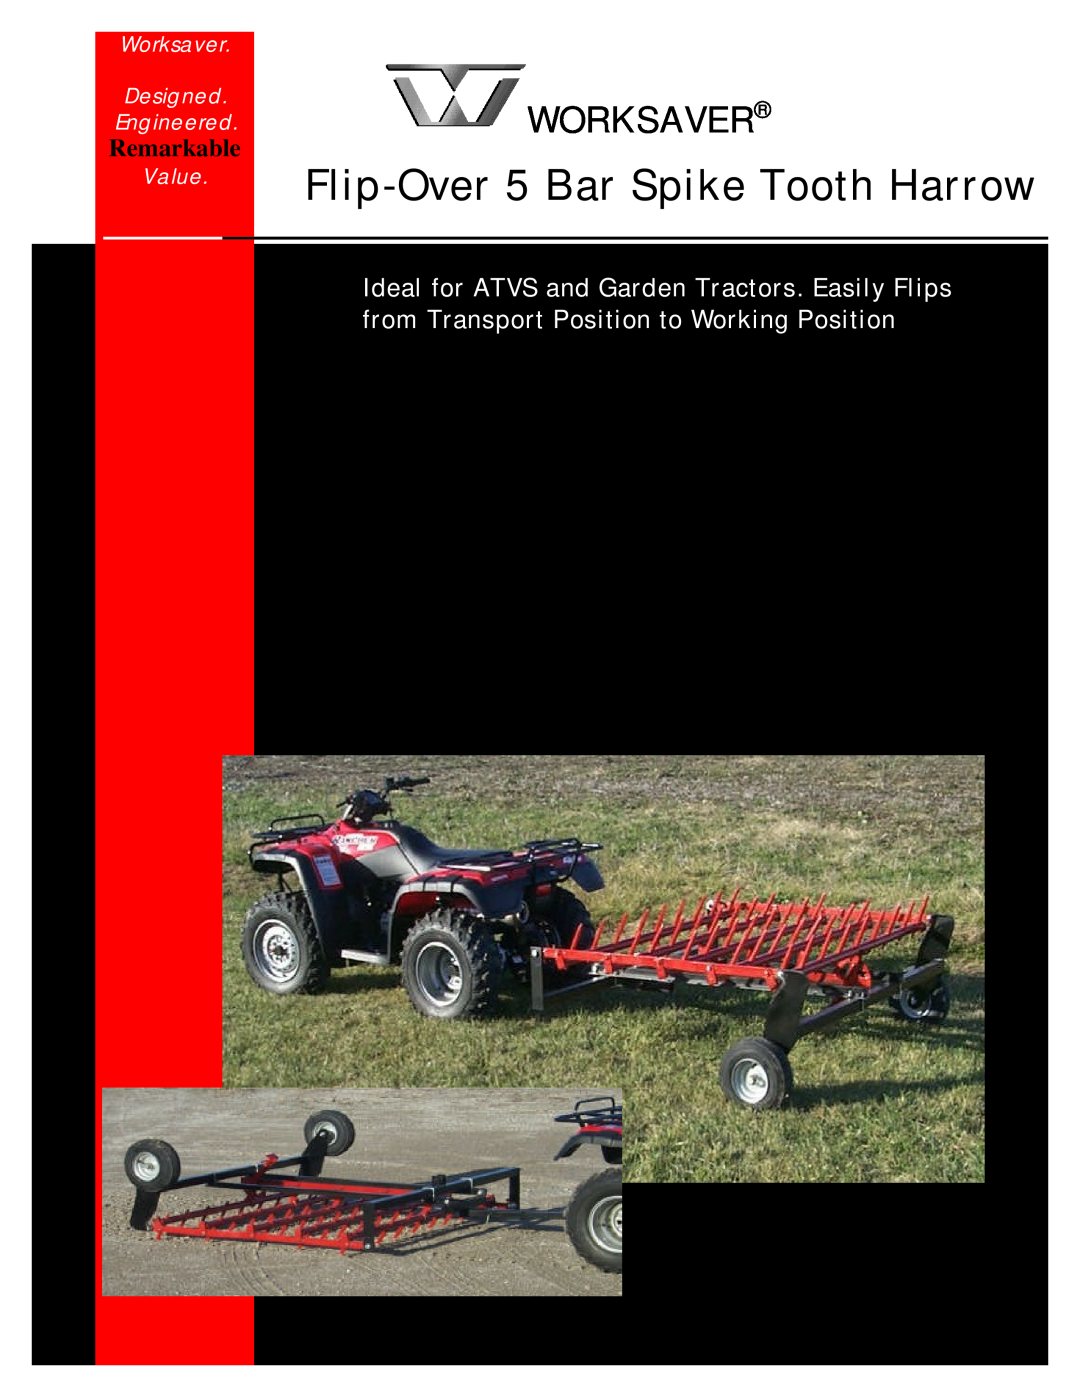 Worksaver 250cc manual Flip-Over 5 Bar Spike Tooth Harrow, Remarkable, Worksaver Designed Engineered, Value 